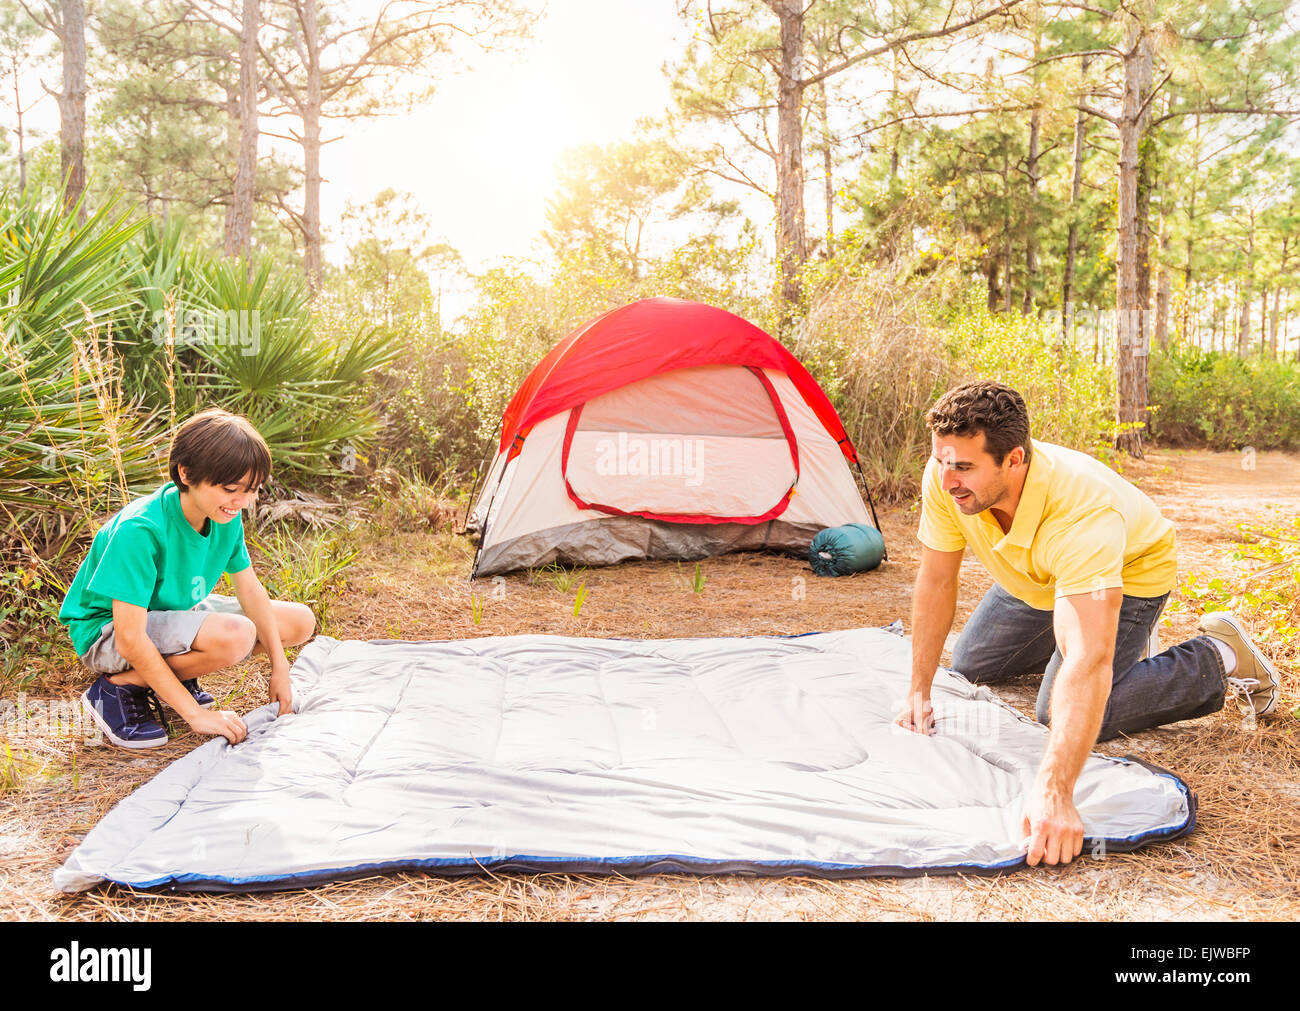 USA, Florida, Jupiter, Father and son (12-13) preparing sleeping bag for camping Stock Photo